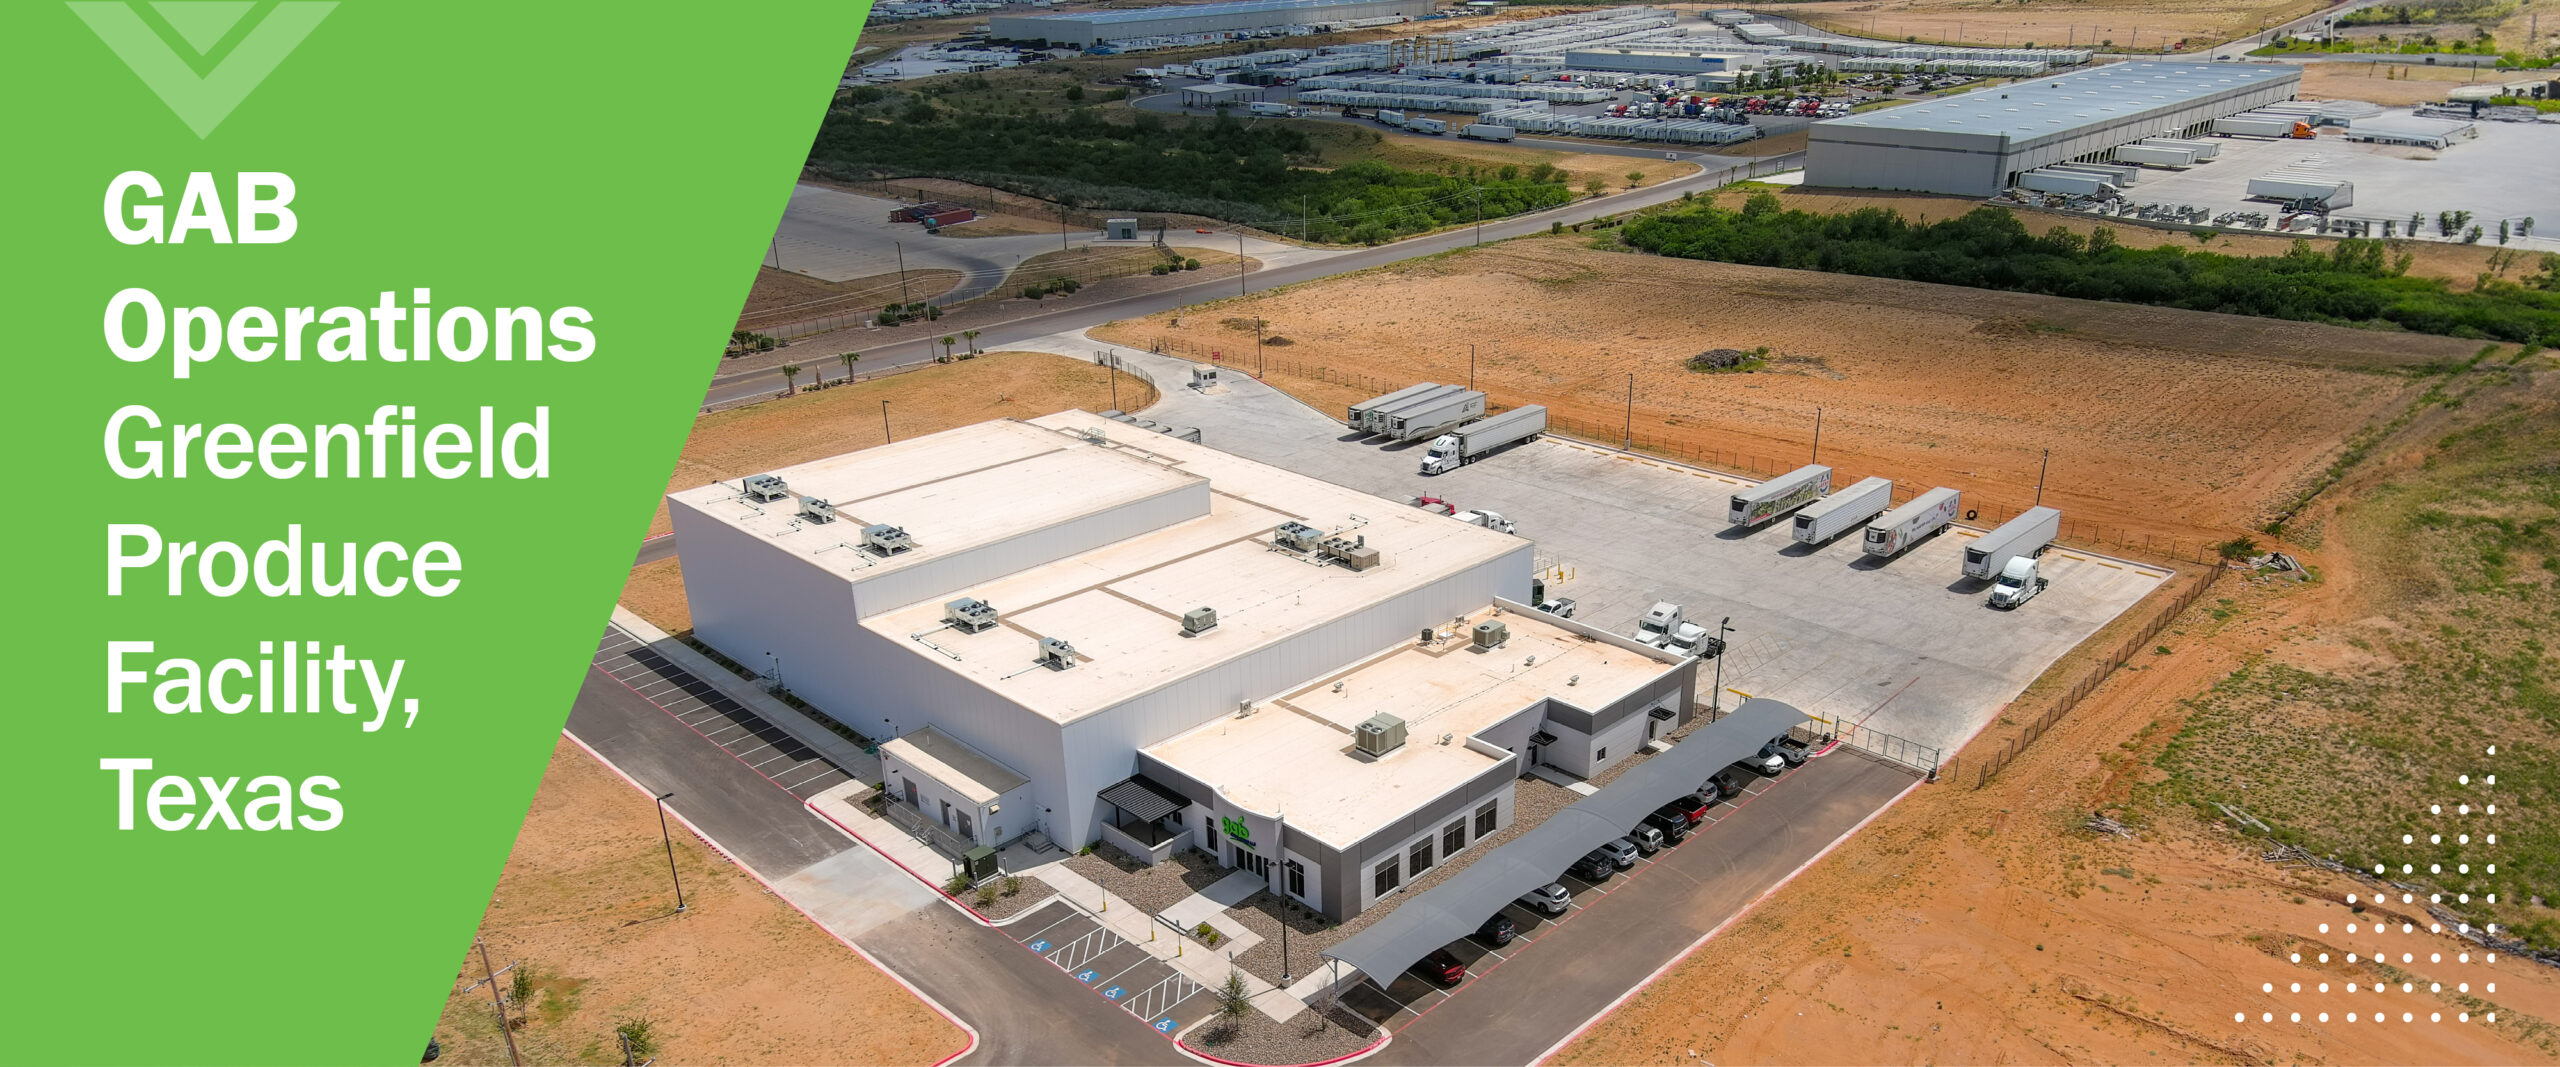 Design-Build Career: GAB Operations Greenfield Produce Facility, Texas.